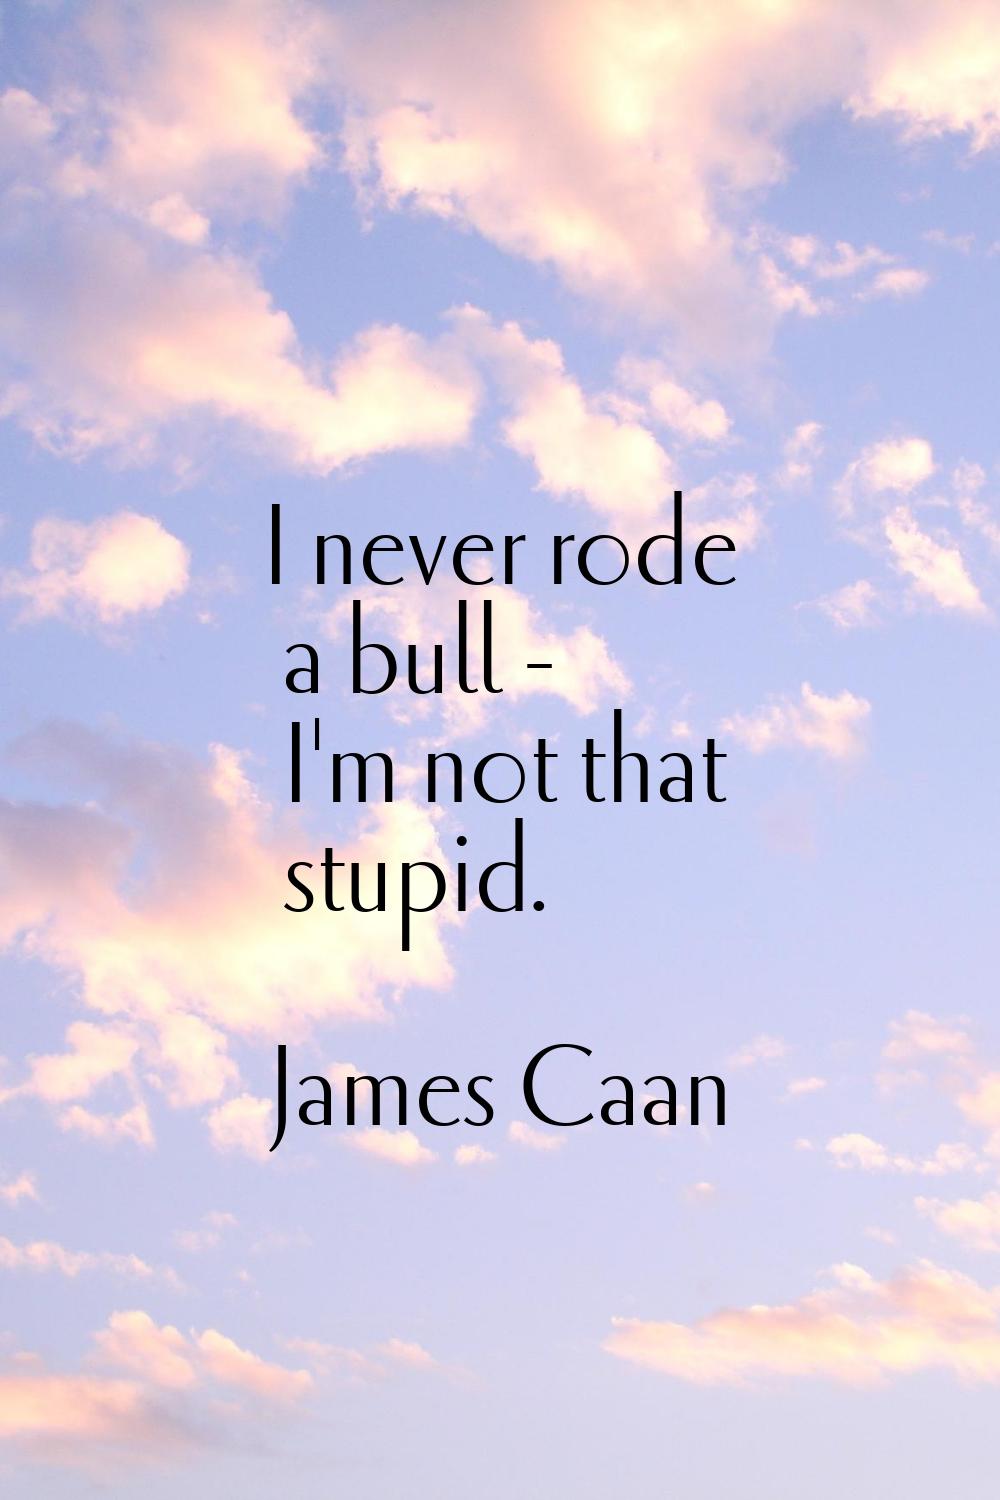 I never rode a bull - I'm not that stupid.